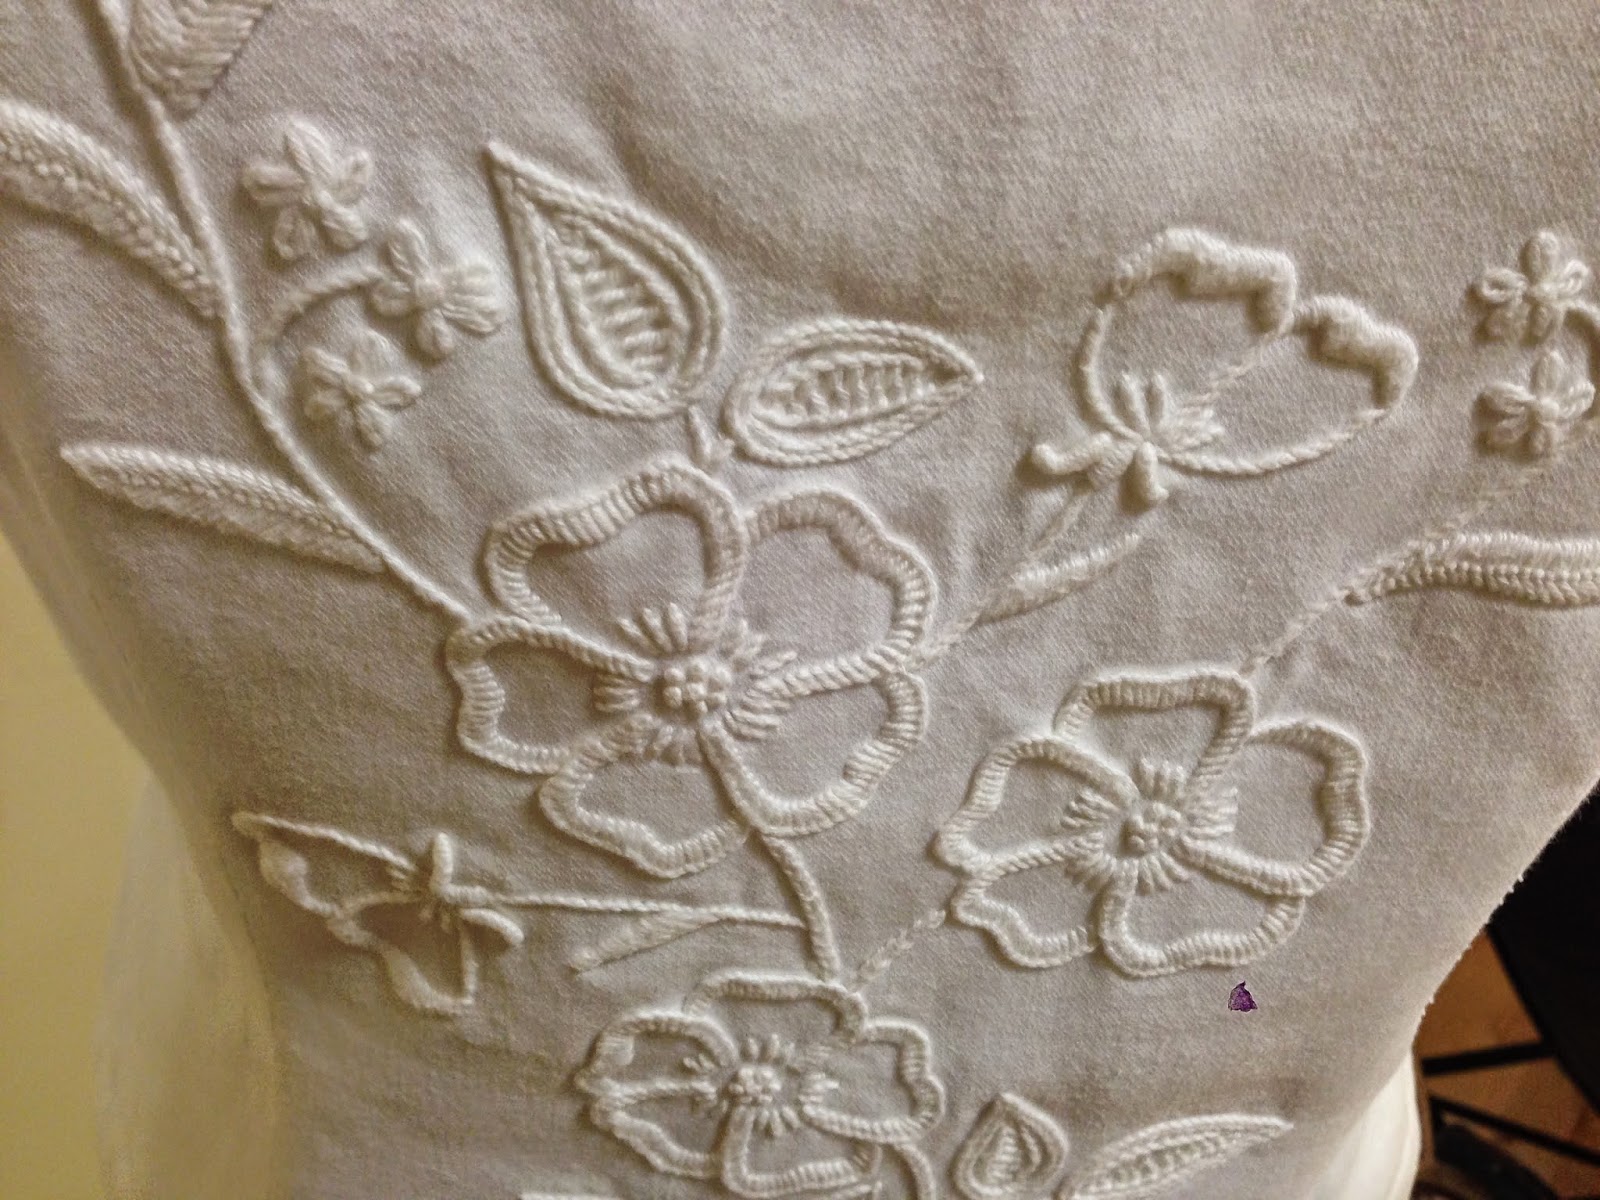 mountmellick embroidery